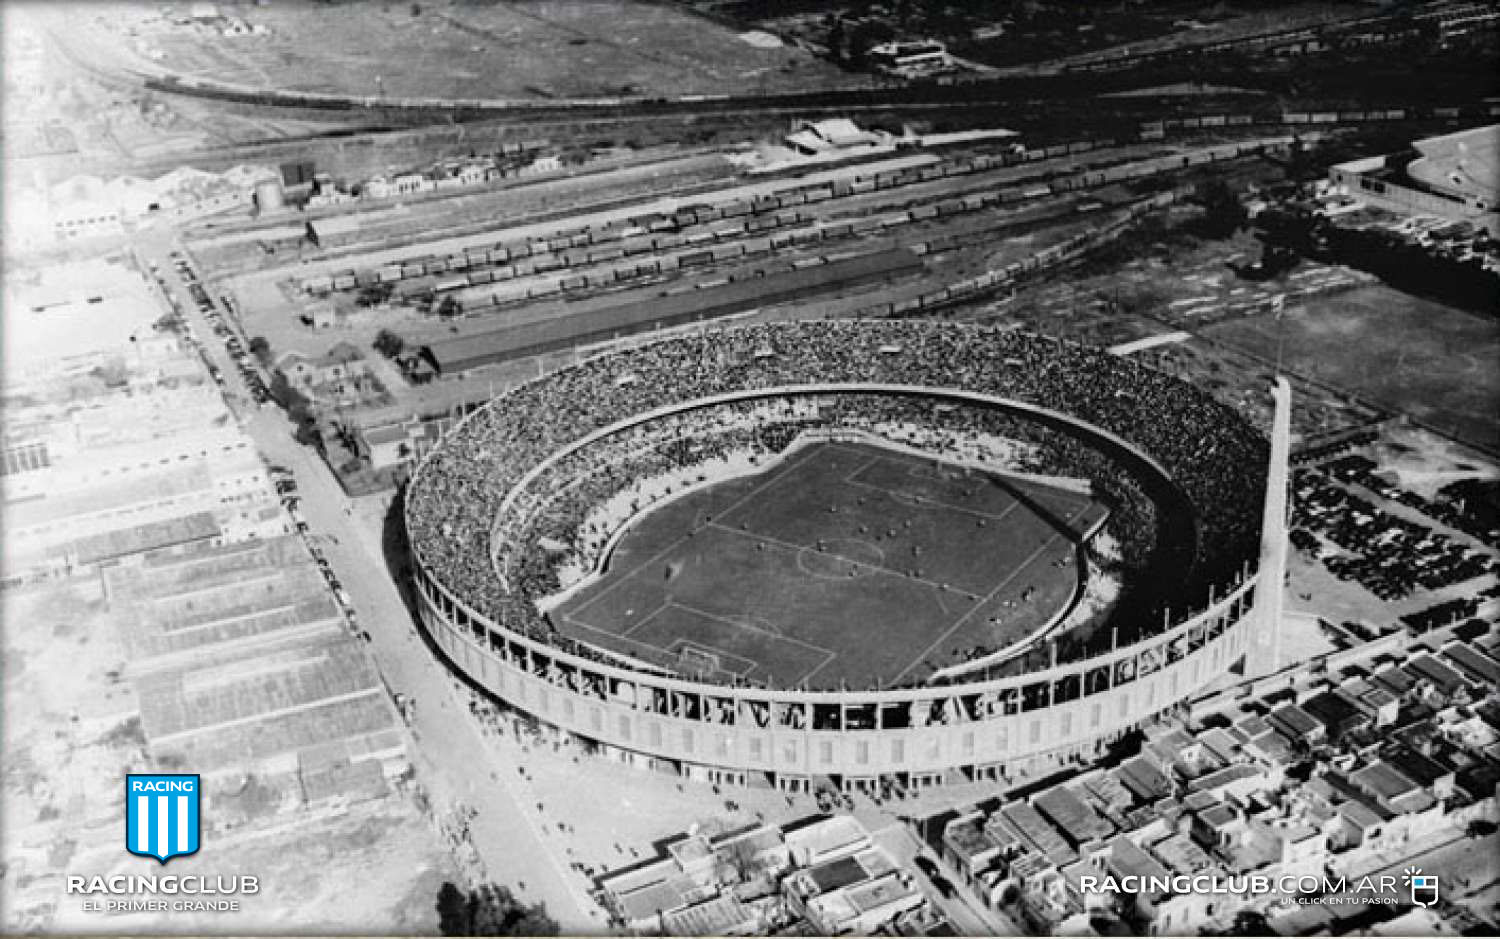 Presidente Perón Stadium | Racing Club - Official website